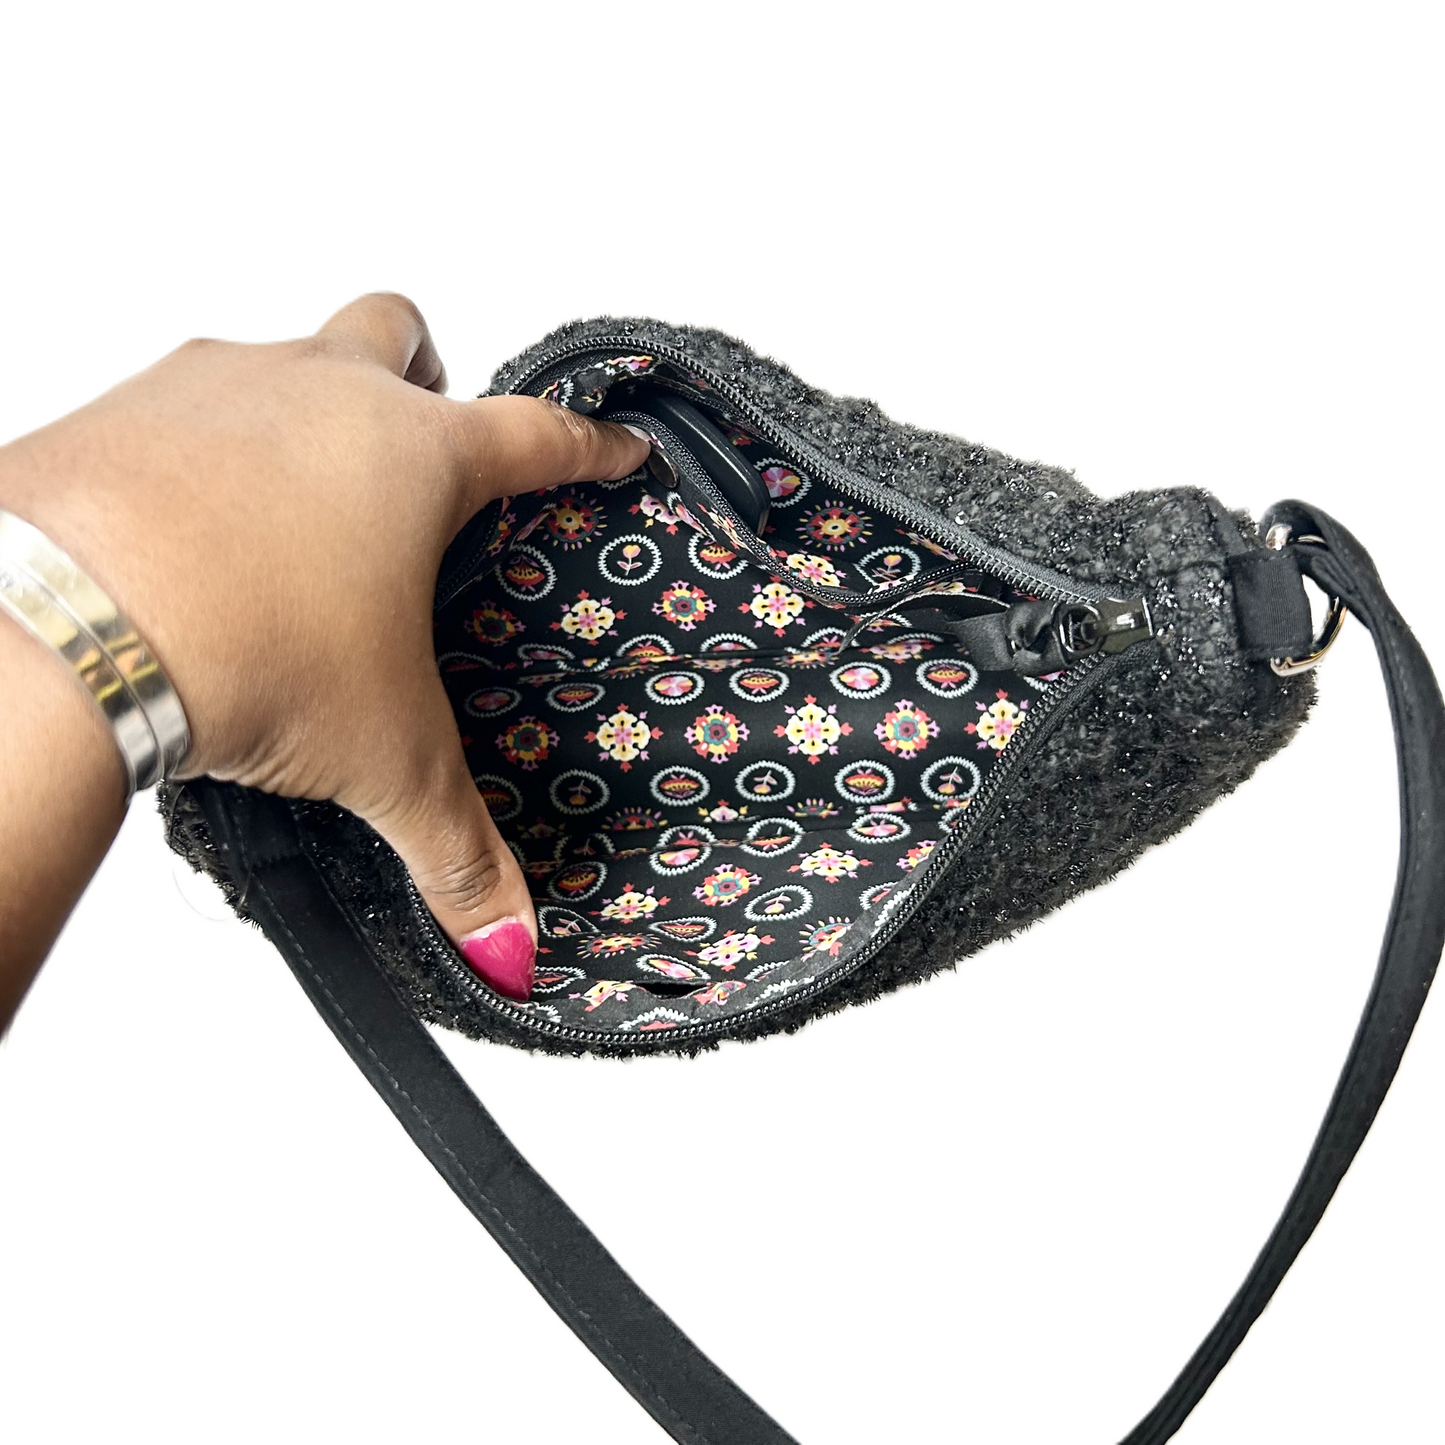 Handbag By Vera Bradley, Size: Medium